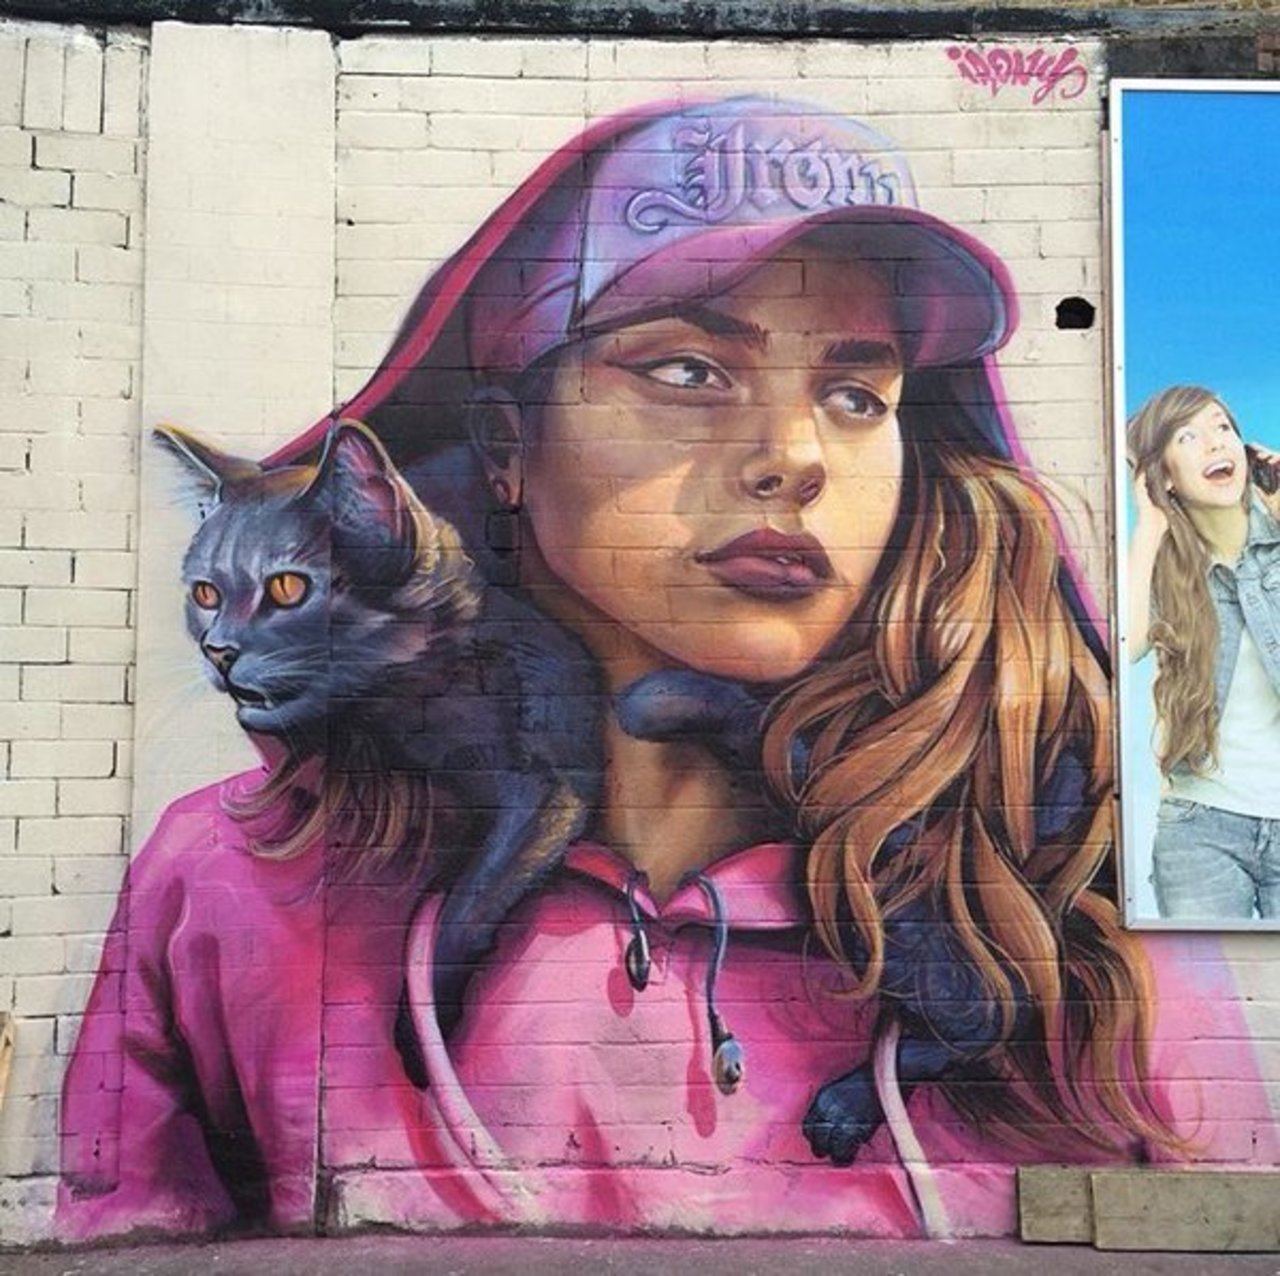 Whoamirony Found in Toothing London #art #mural #graffiti #streetart https://t.co/xqPb0bbjpf